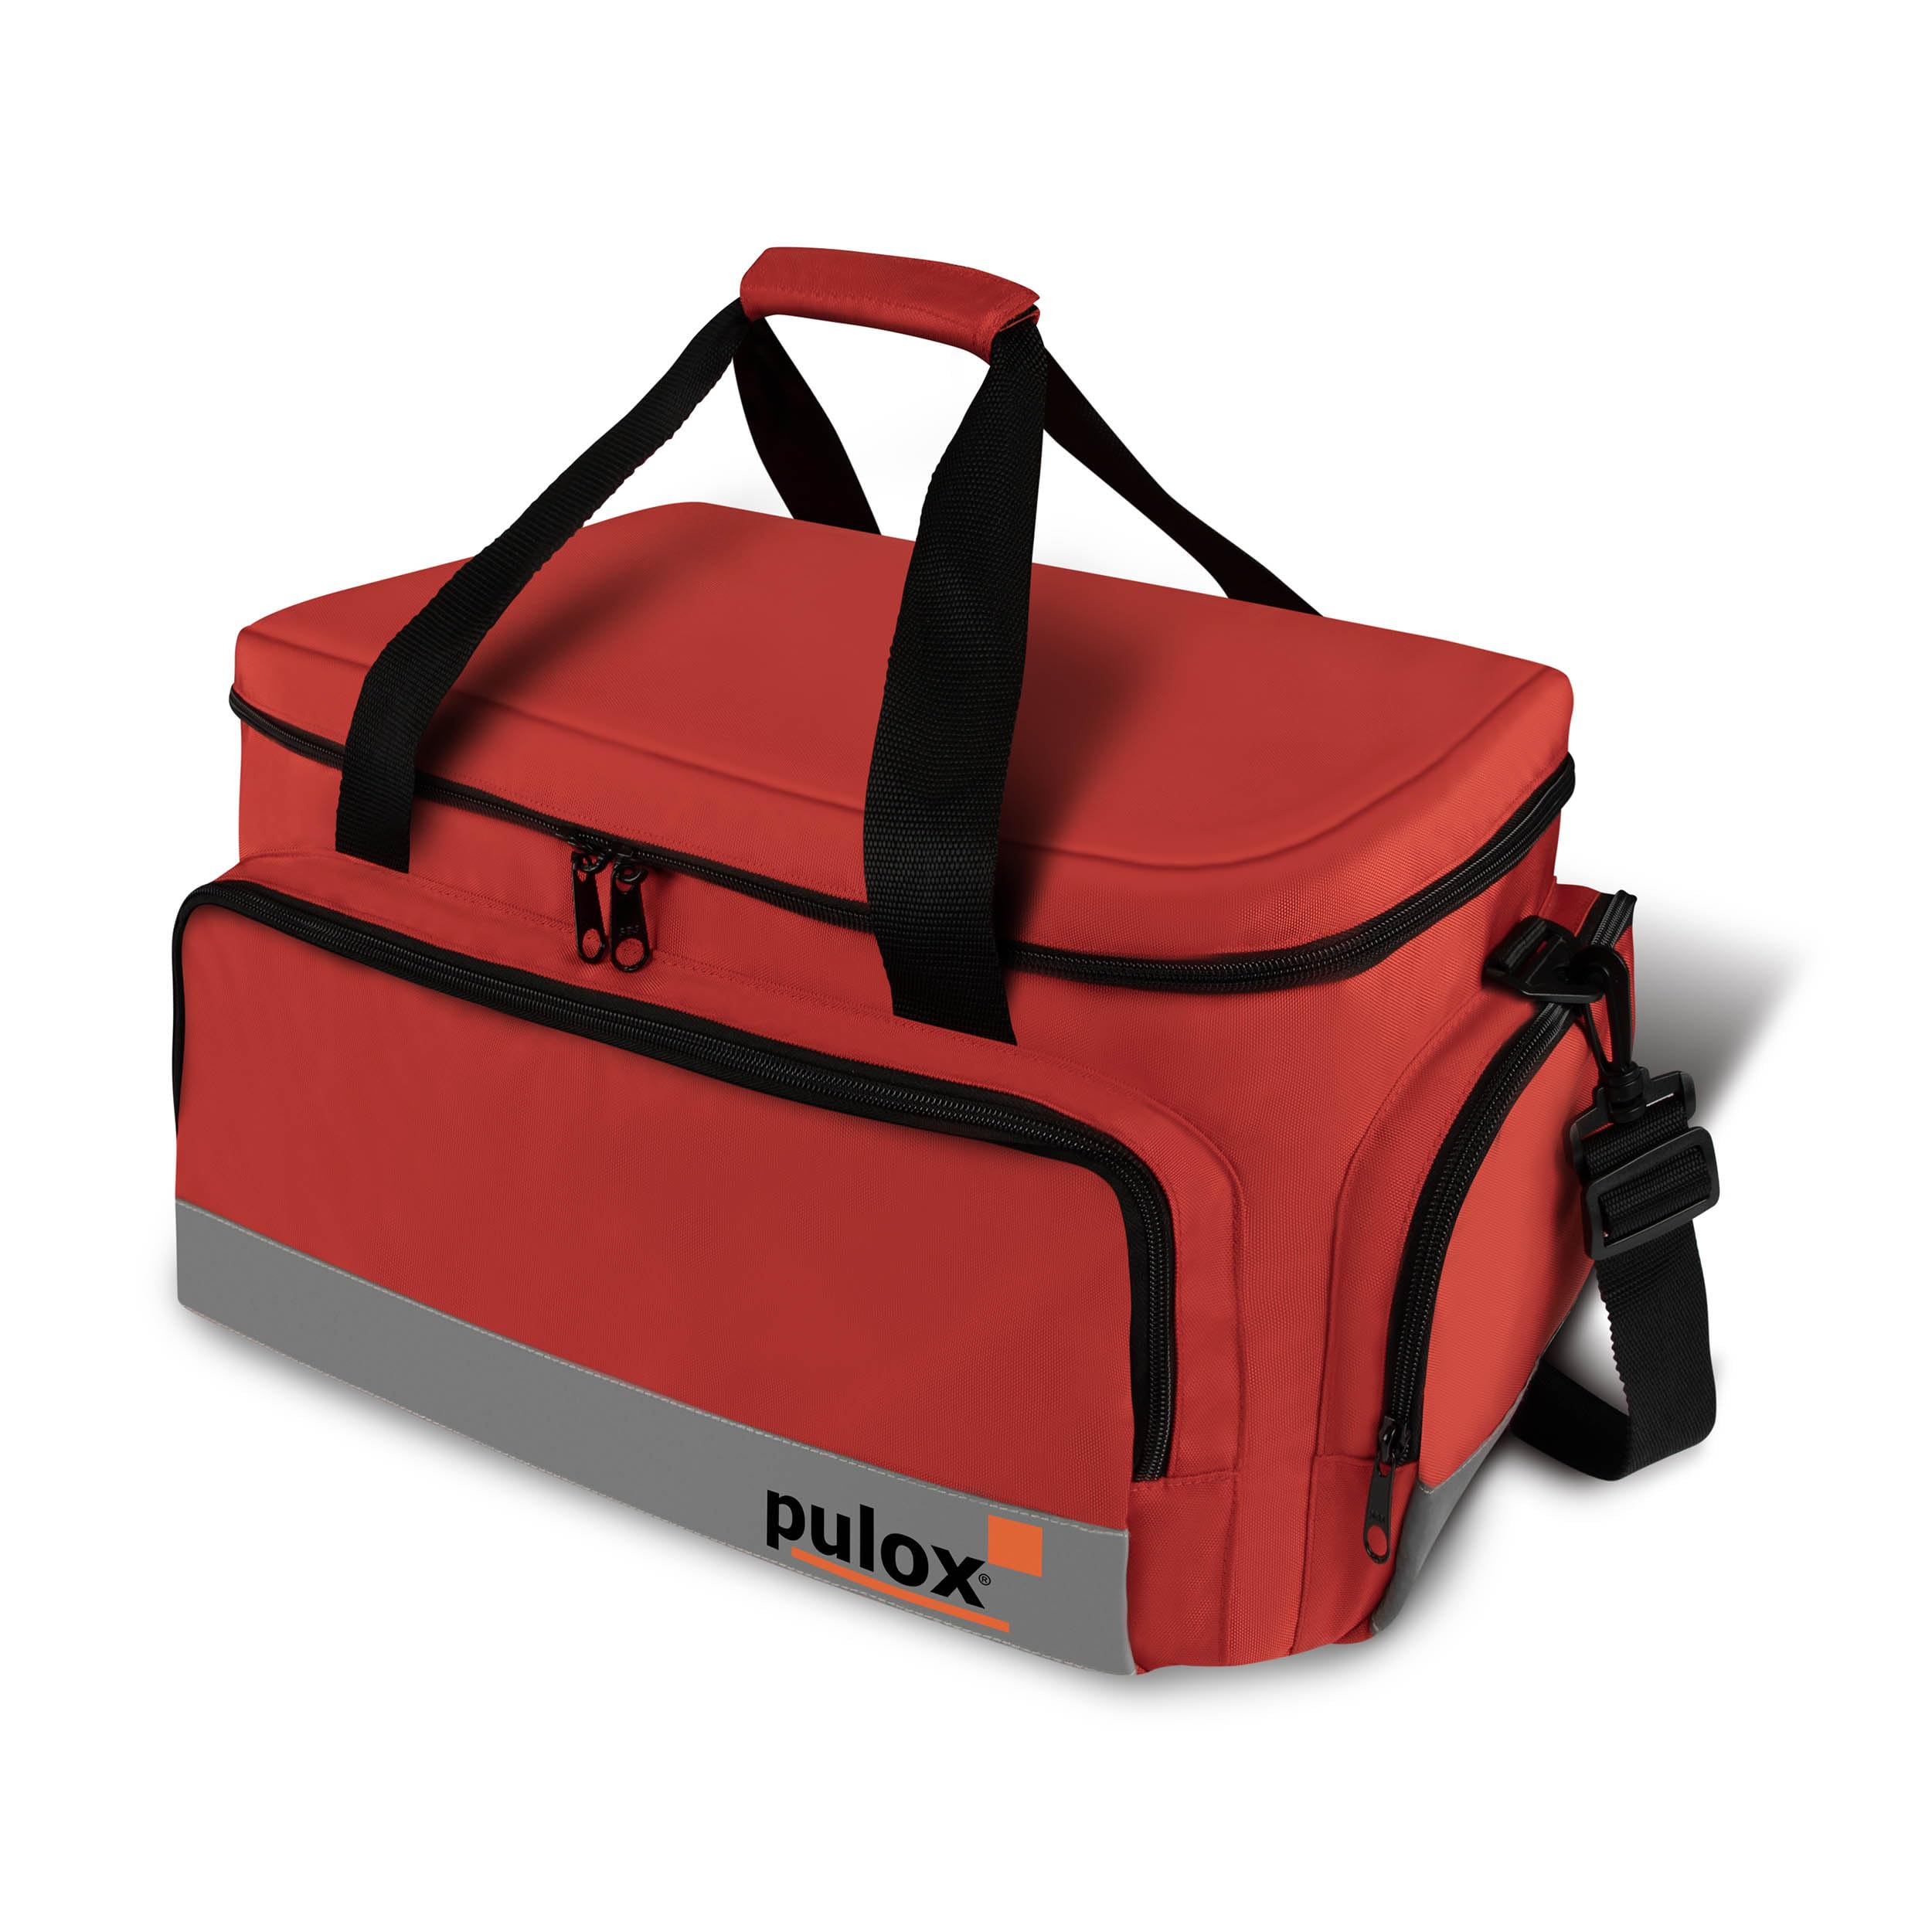 PULOX Erste-Hilfe Notfalltasche inkl. Füllung, 44 x 27 x 25 cm, aus Nylon in Rot